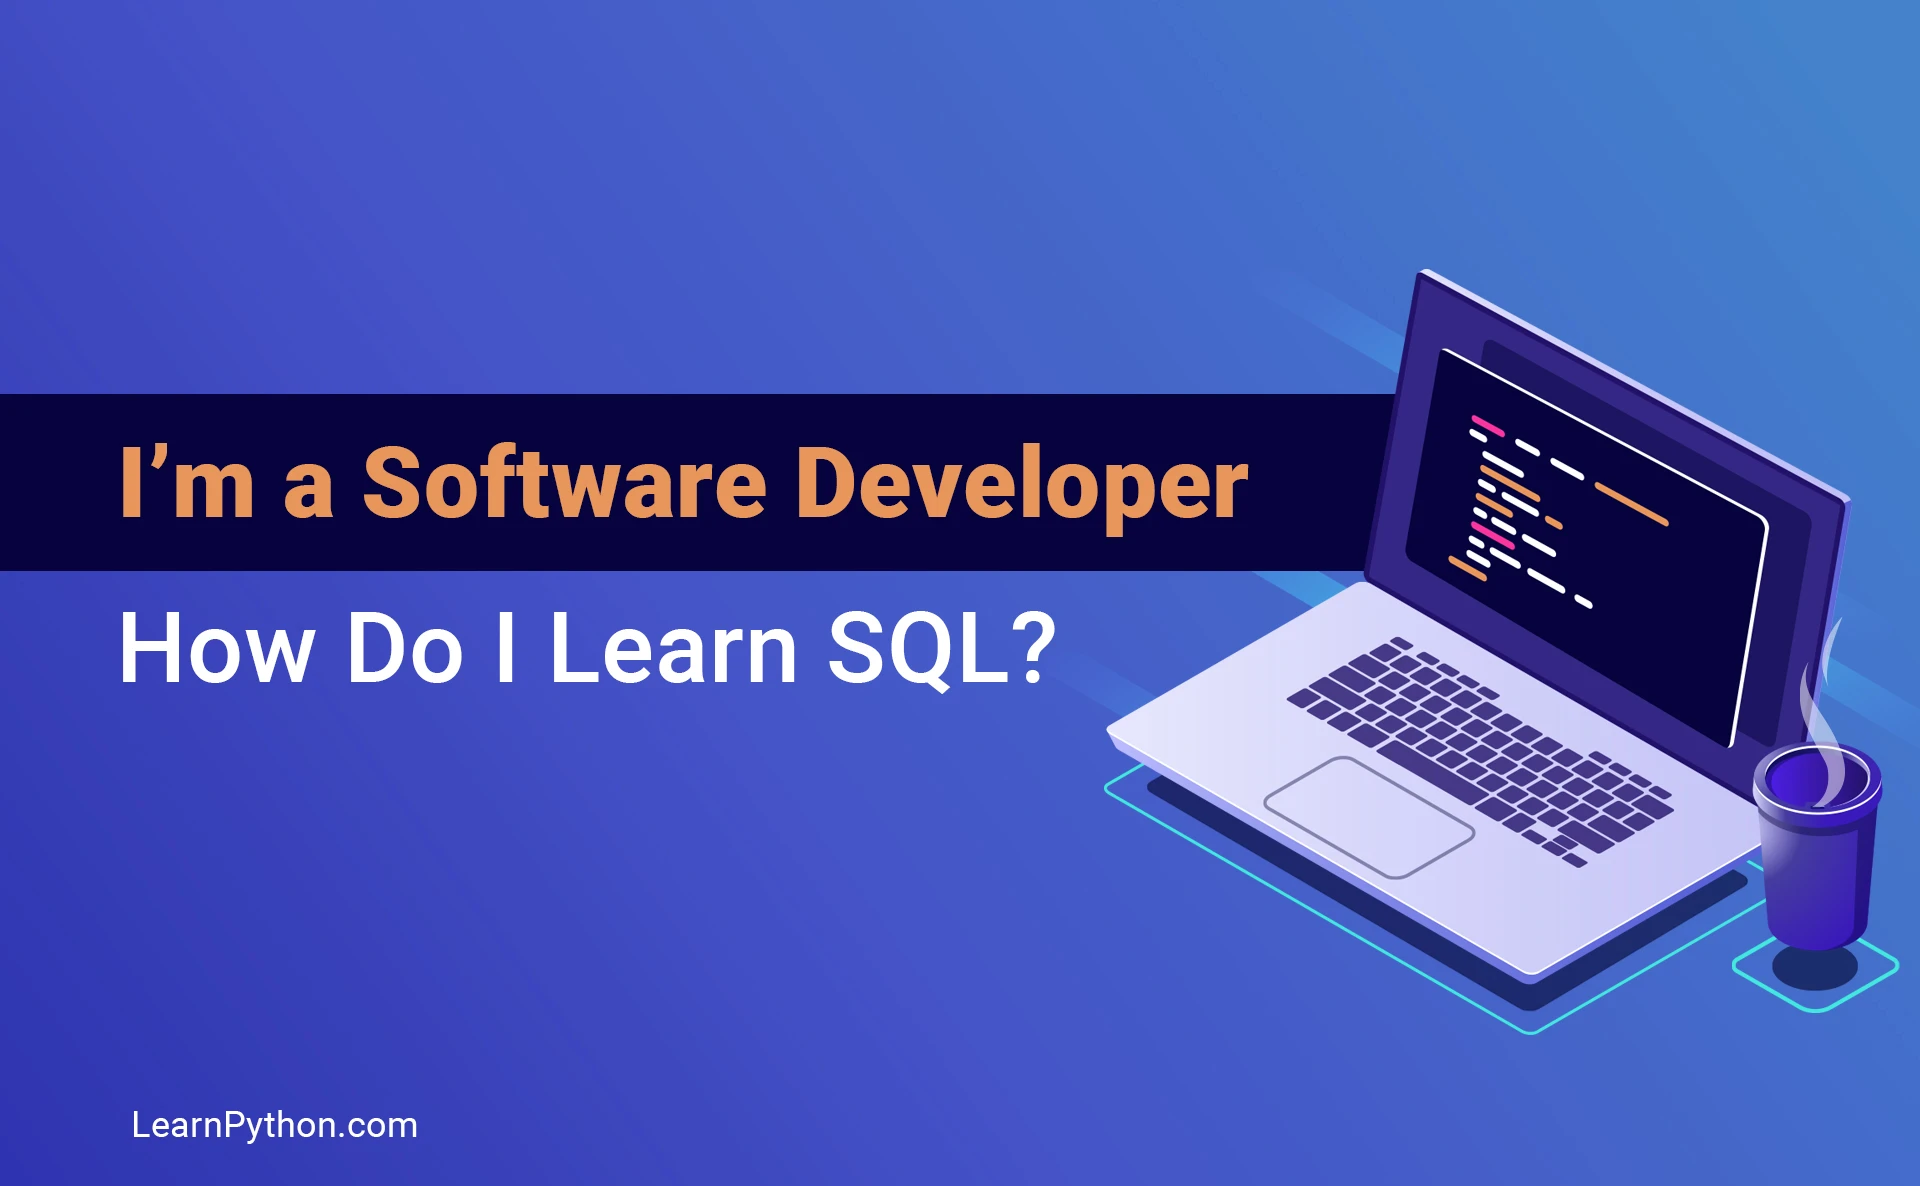 I’m a Software Developer. How Do I Learn SQL?